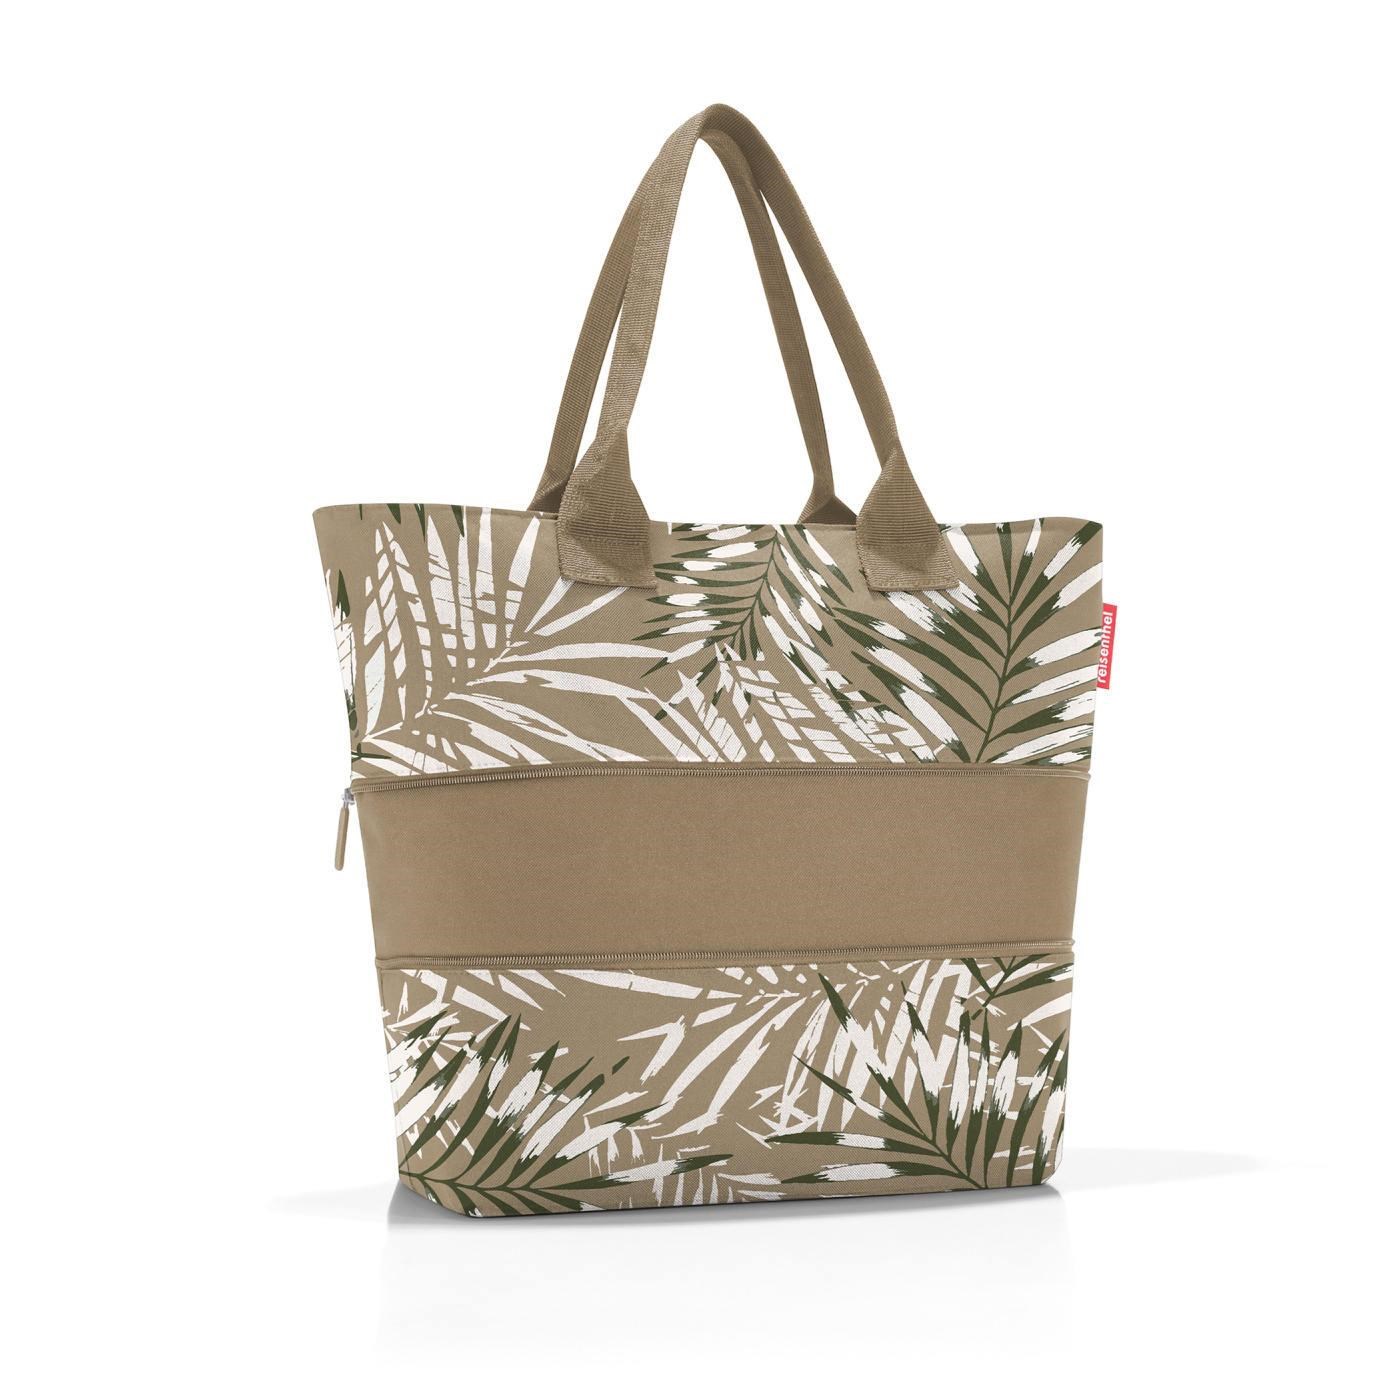 Chytrá taška přes rameno Shopper e1 jungle sand_1